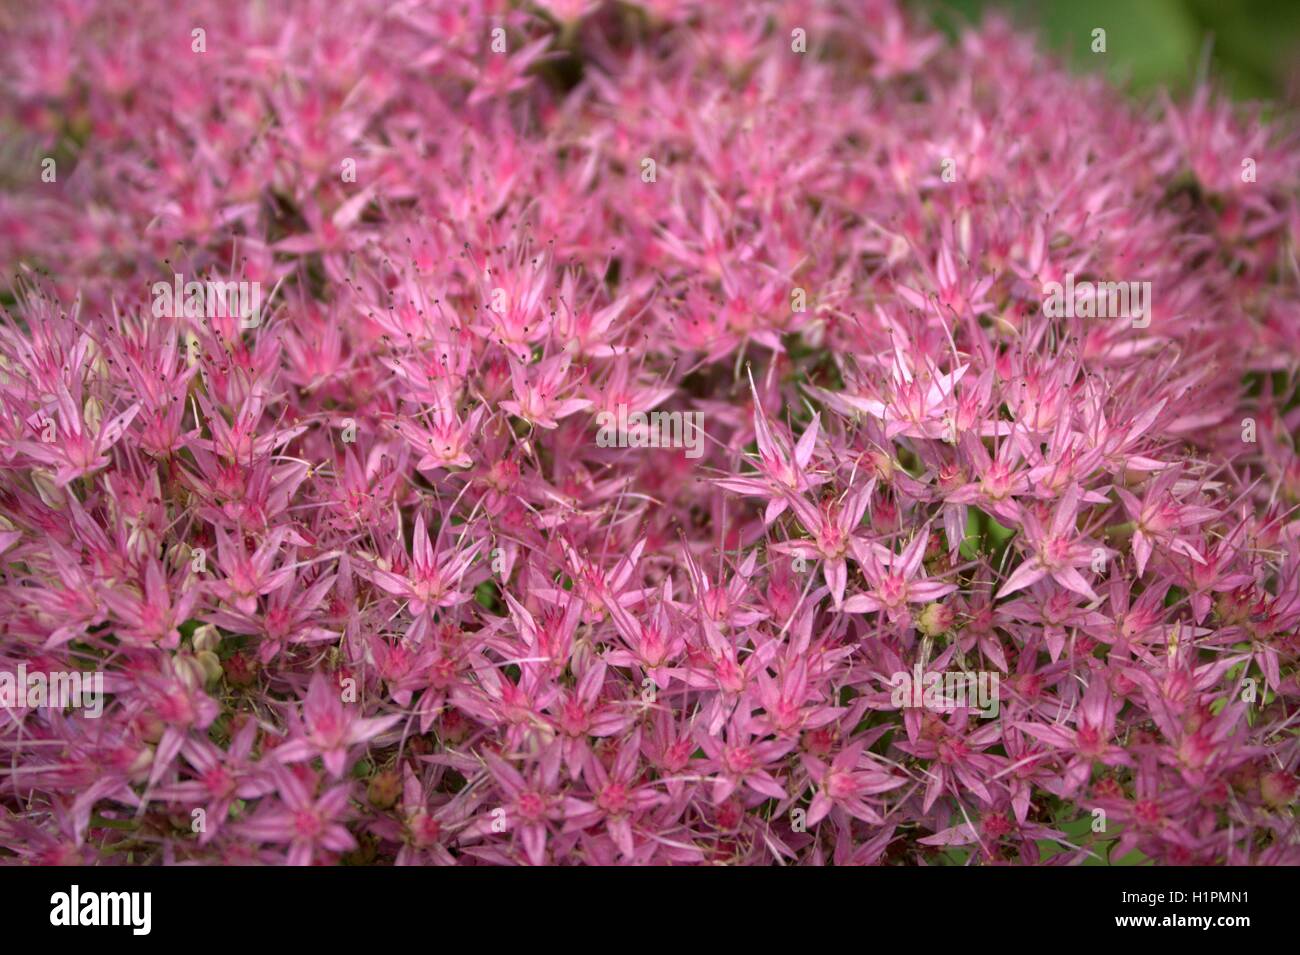 Pink Stone Crop Sedum Flower Blooming Stock Photo